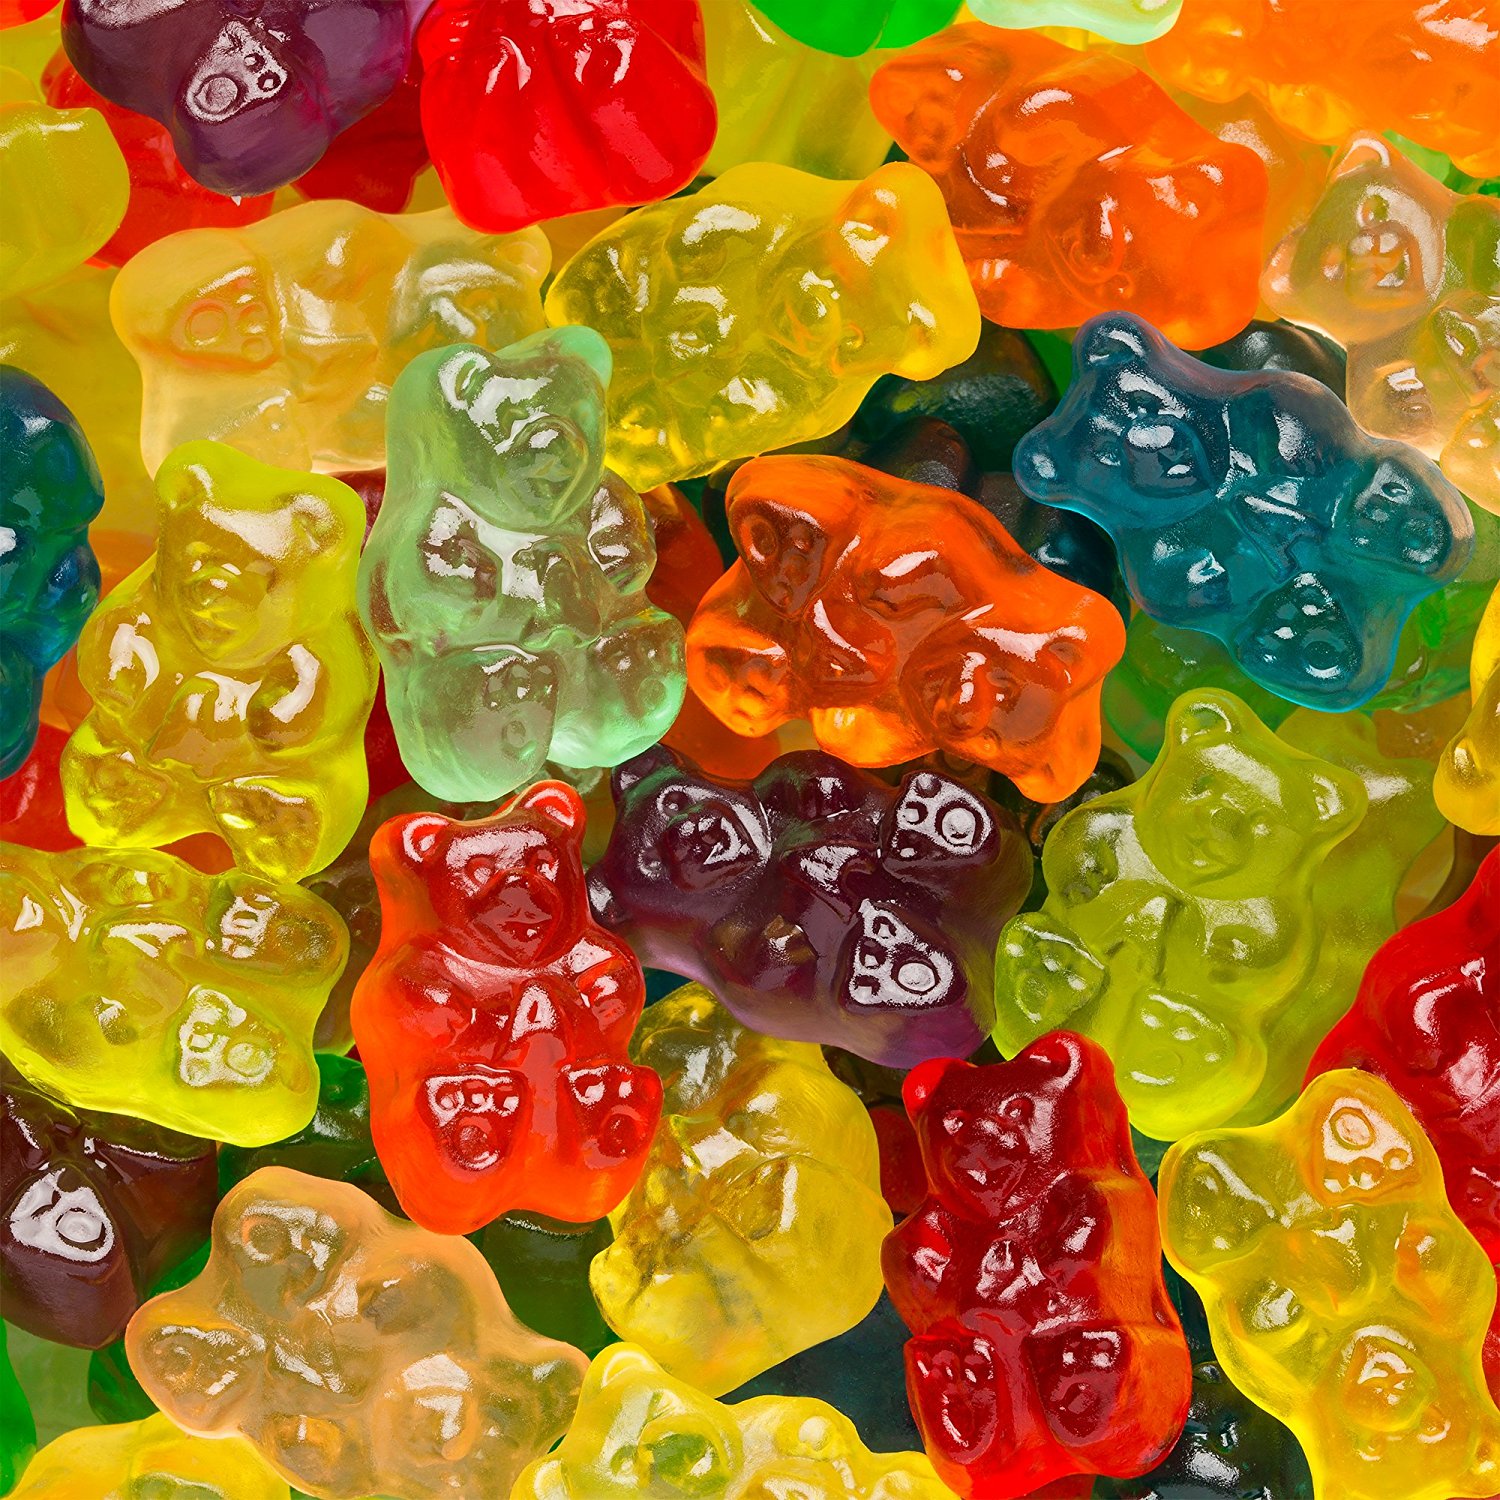 Amazon.com : Albanese Candy, 12 Flavor Gummi Bears, 5 Pound Bag ...